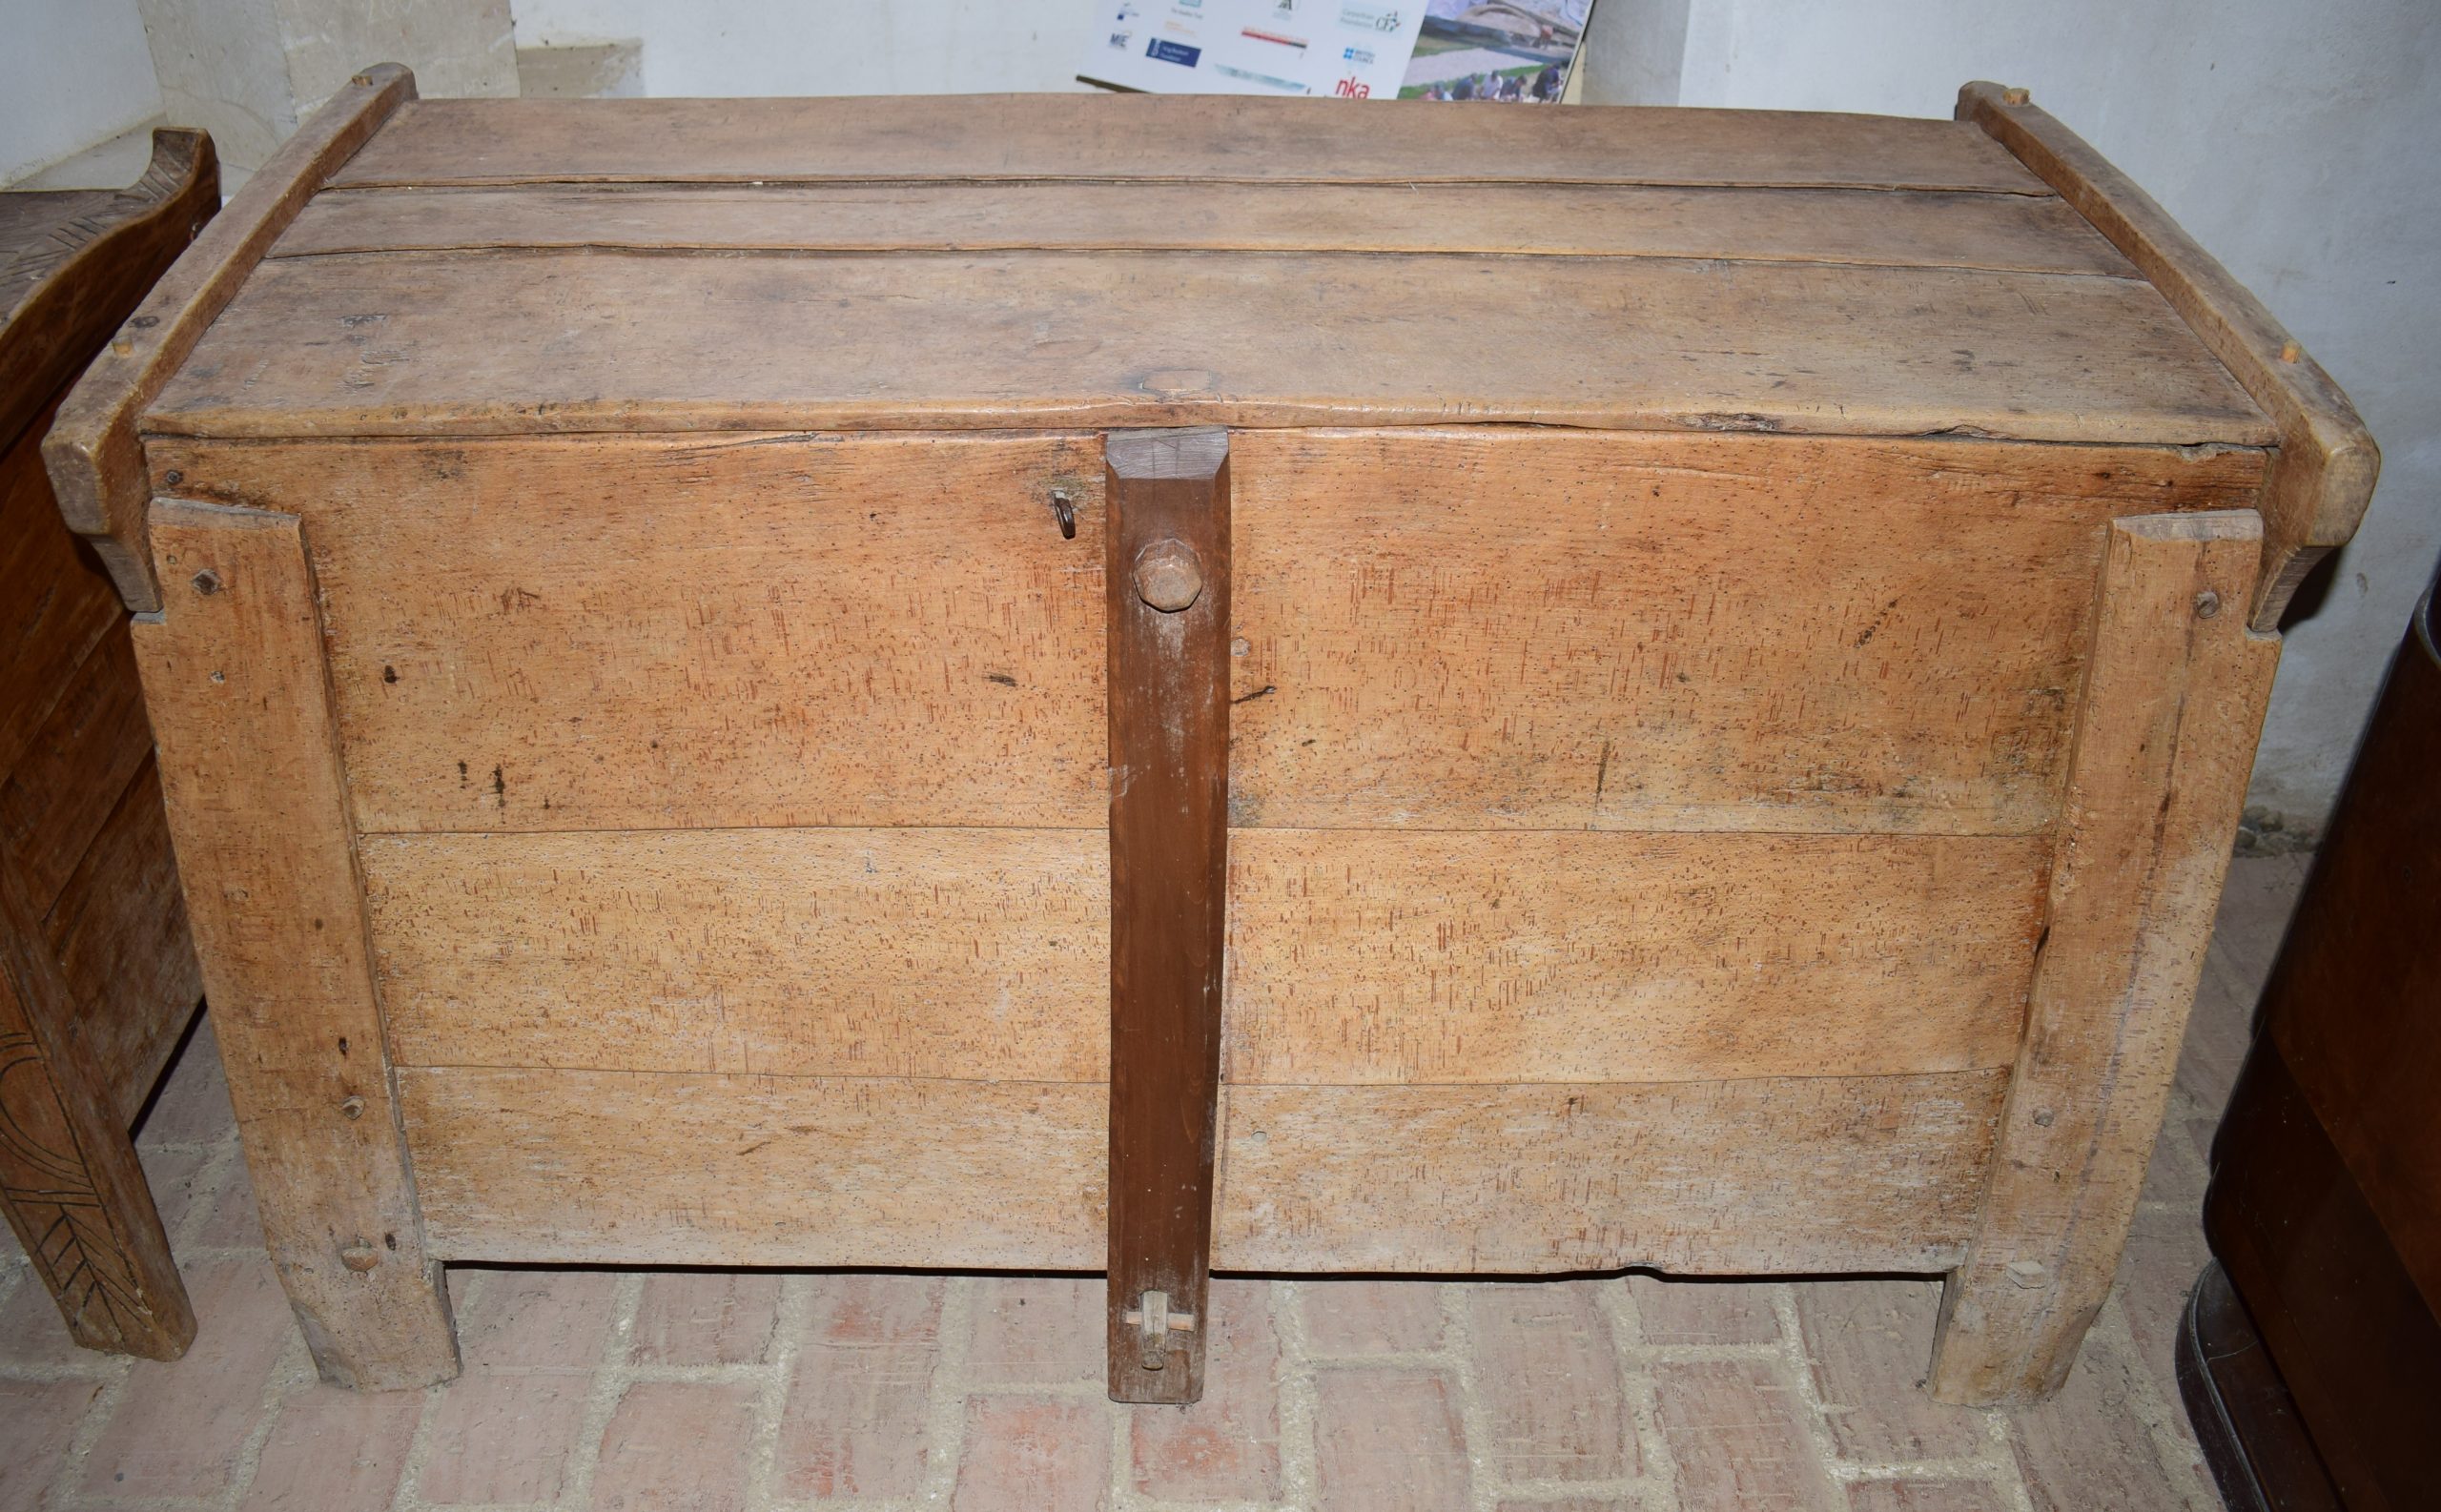 Carpentered grain crate